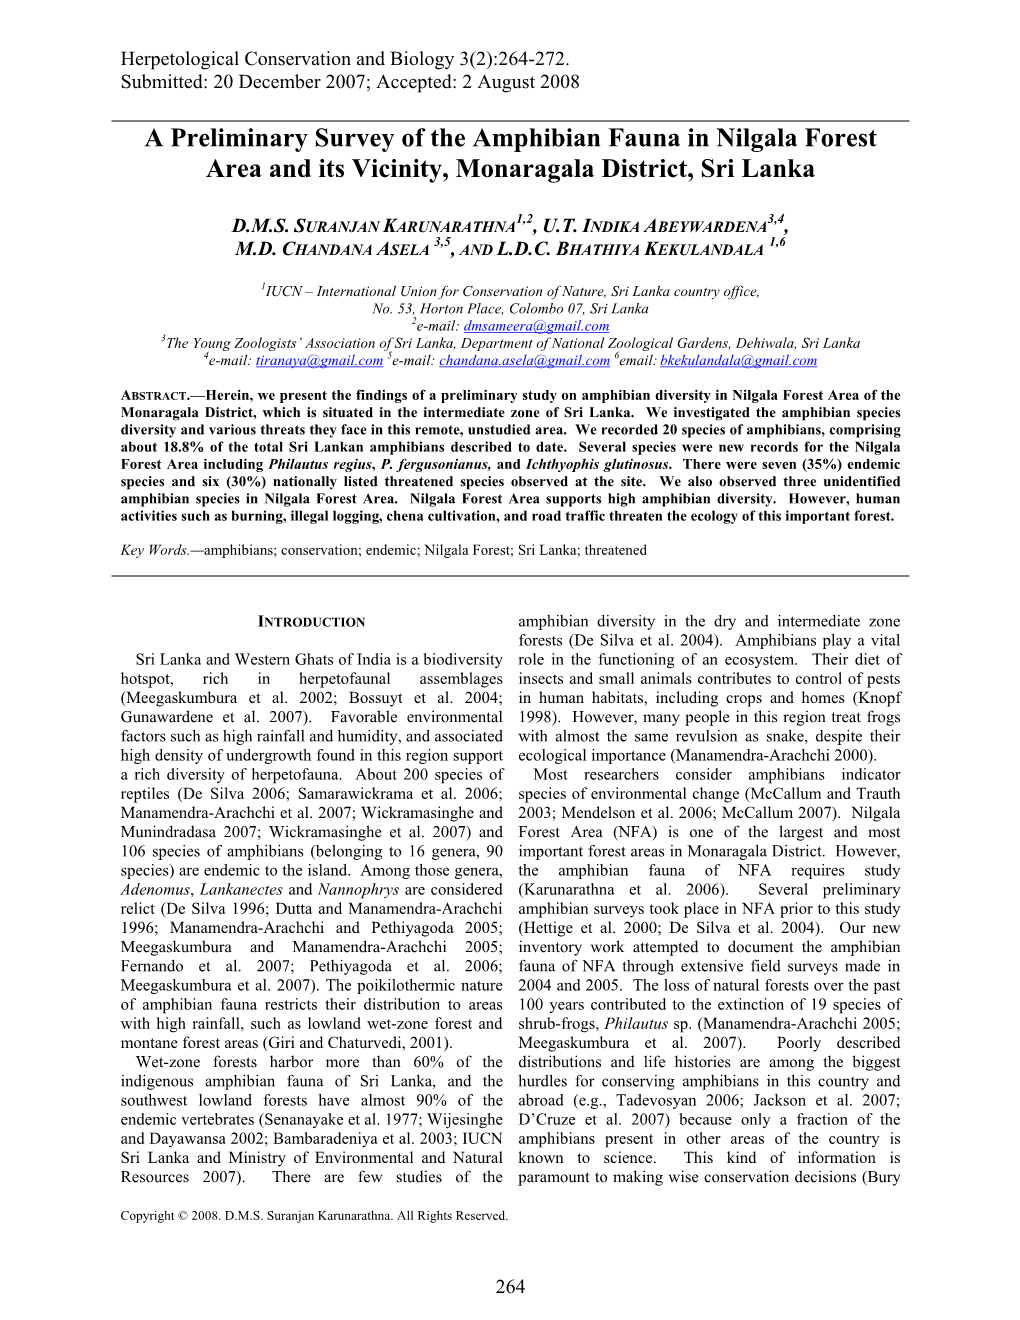 A Preliminary Survey of the Amphibian Fauna in Nilgala Forest Area and Its Vicinity, Monaragala District, Sri Lanka